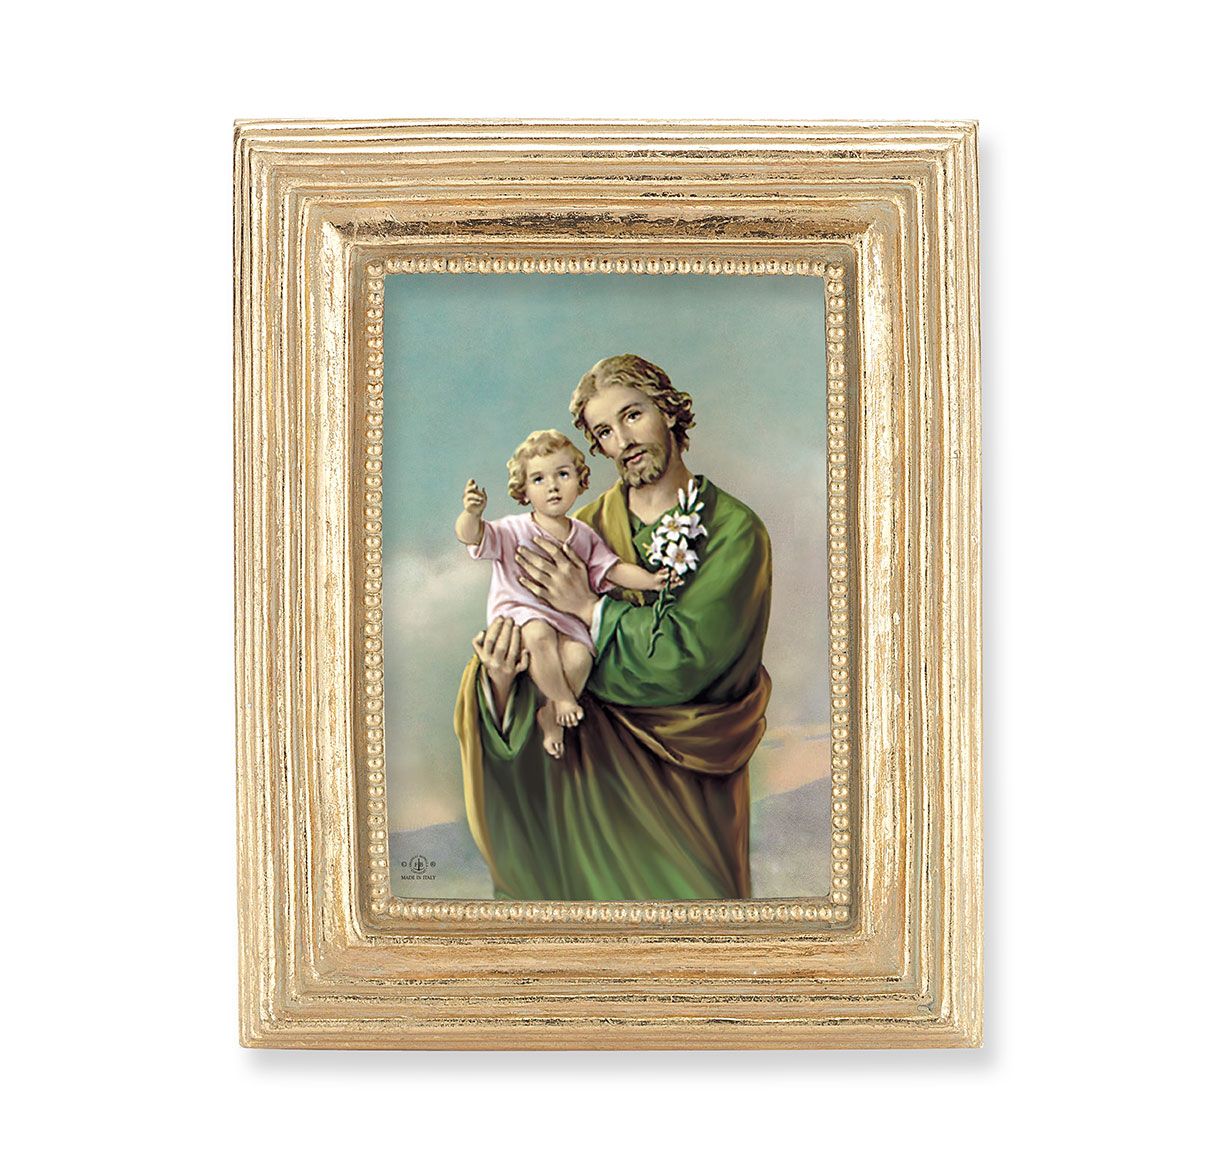 Gold Frame with a Saint Joseph